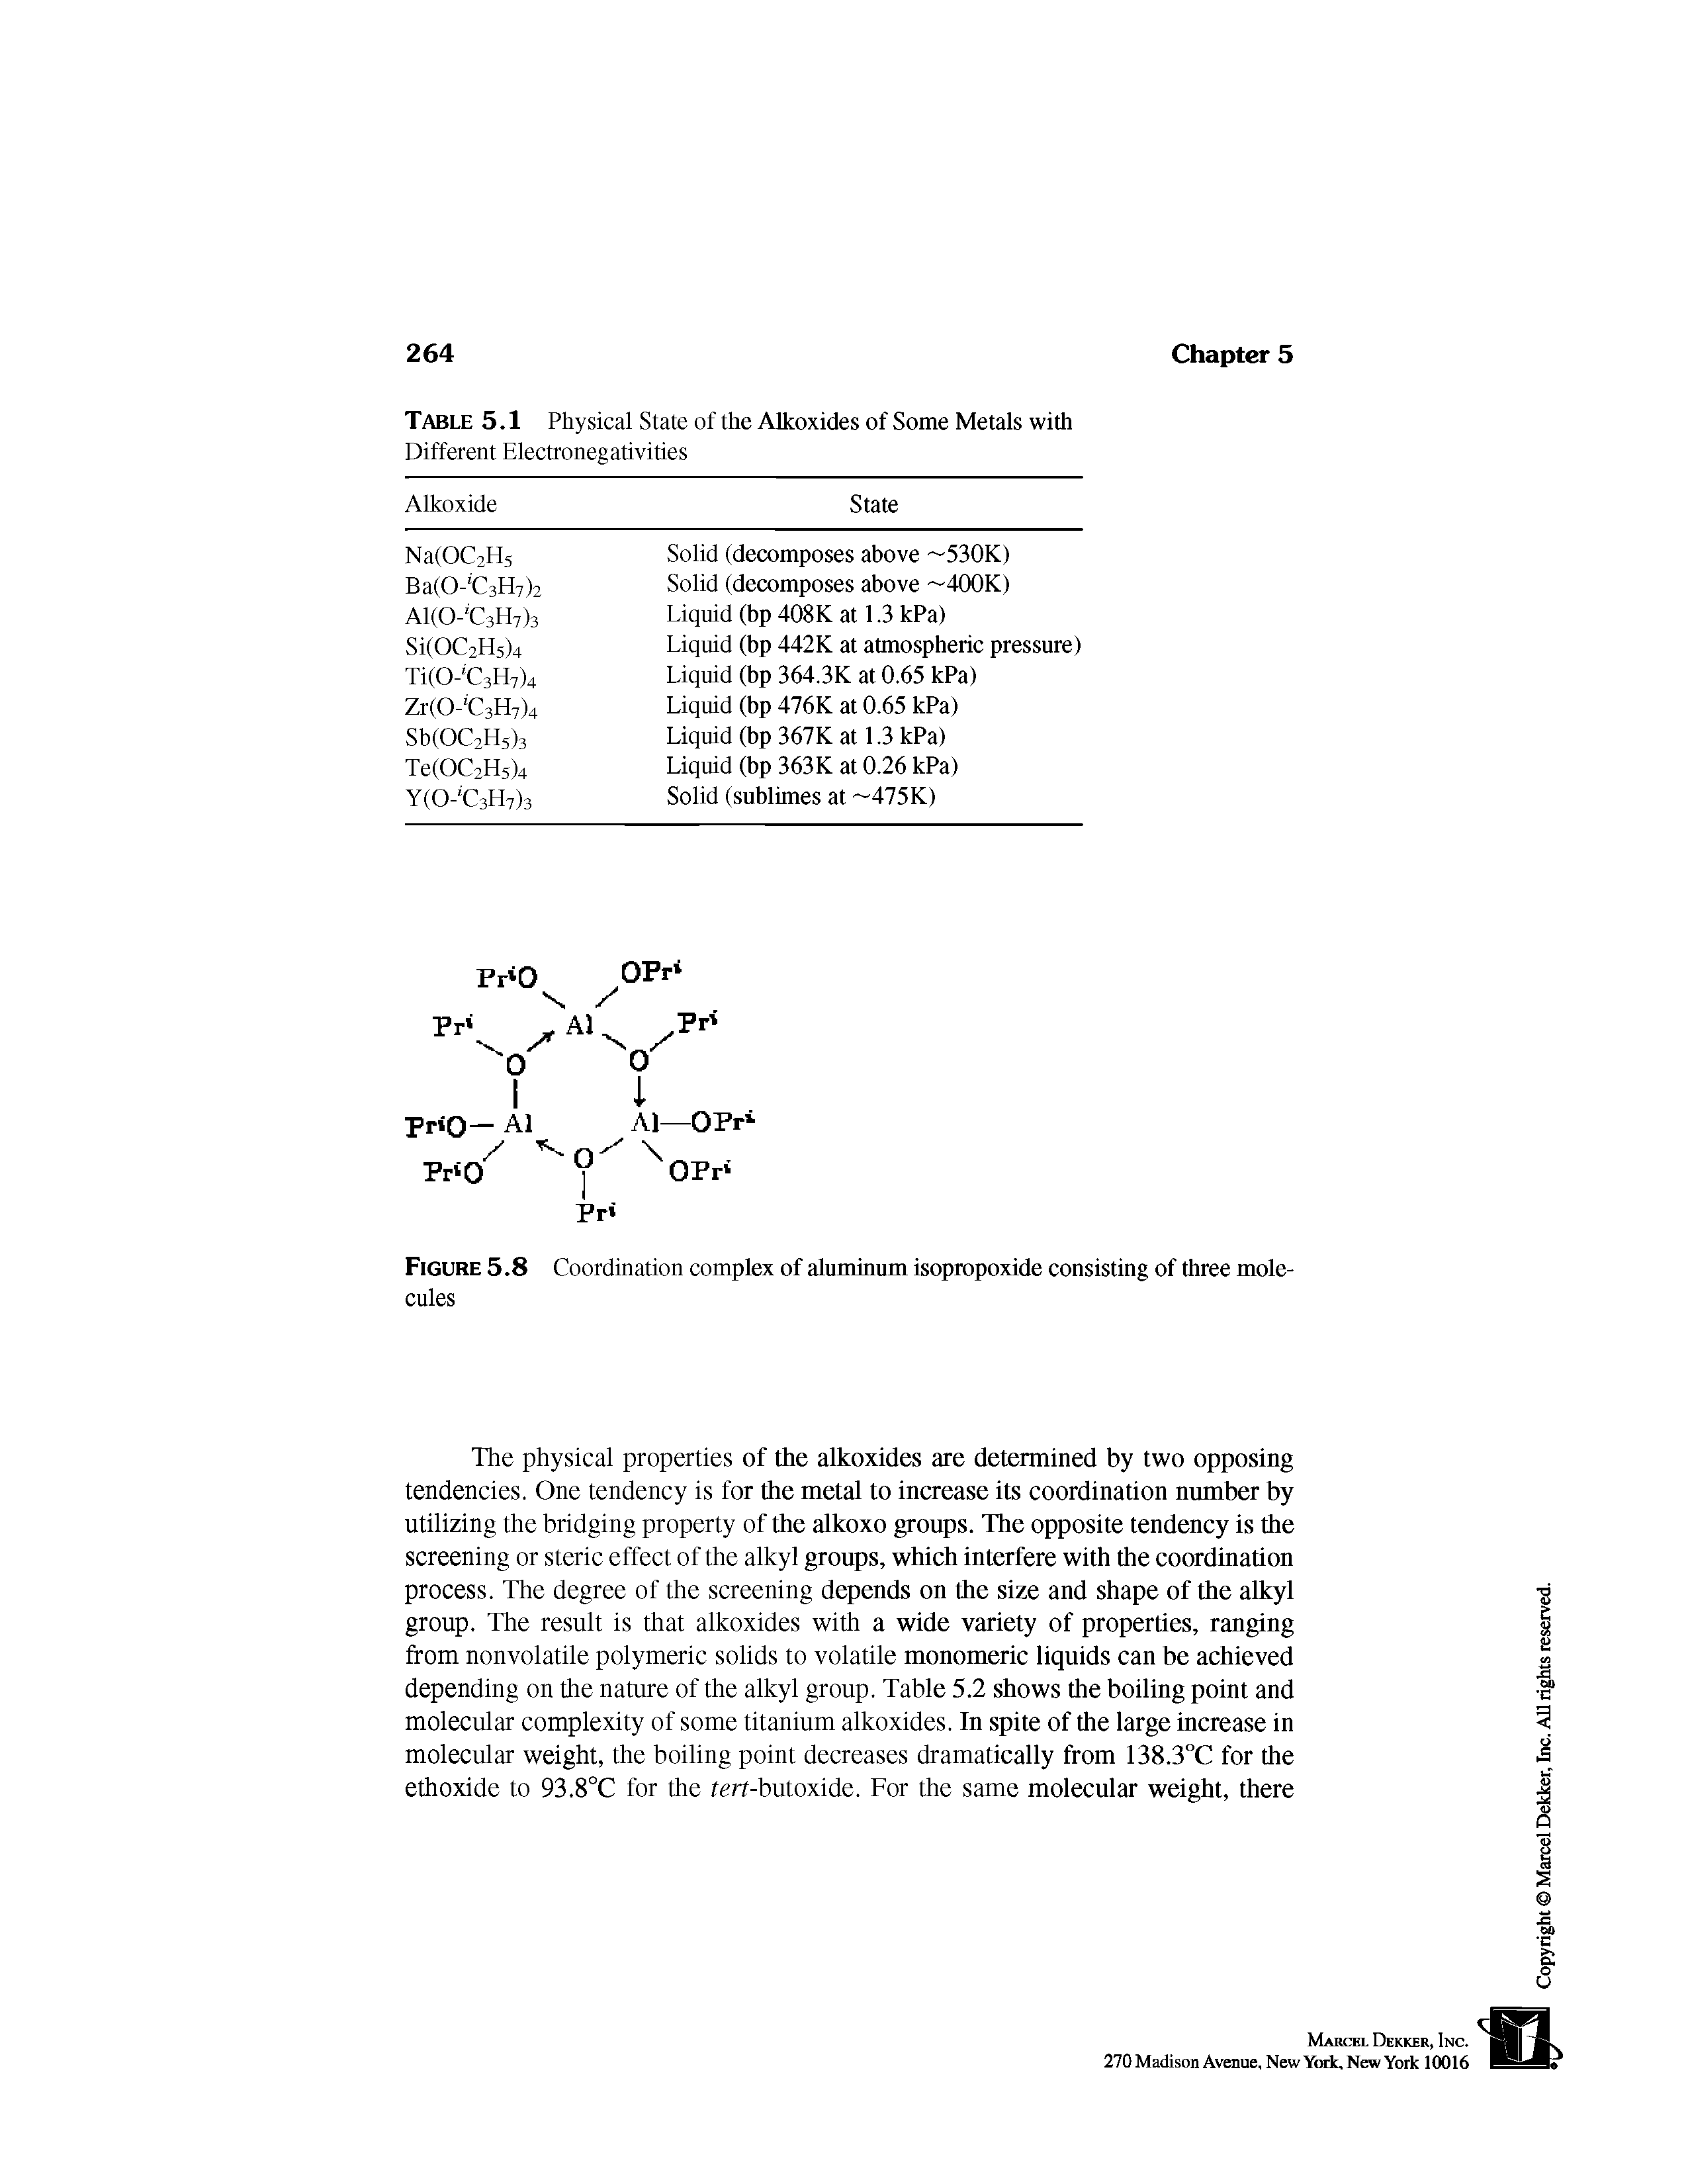 Figure 5.8 Coordination complex of aluminum isopropoxide consisting of three molecules...